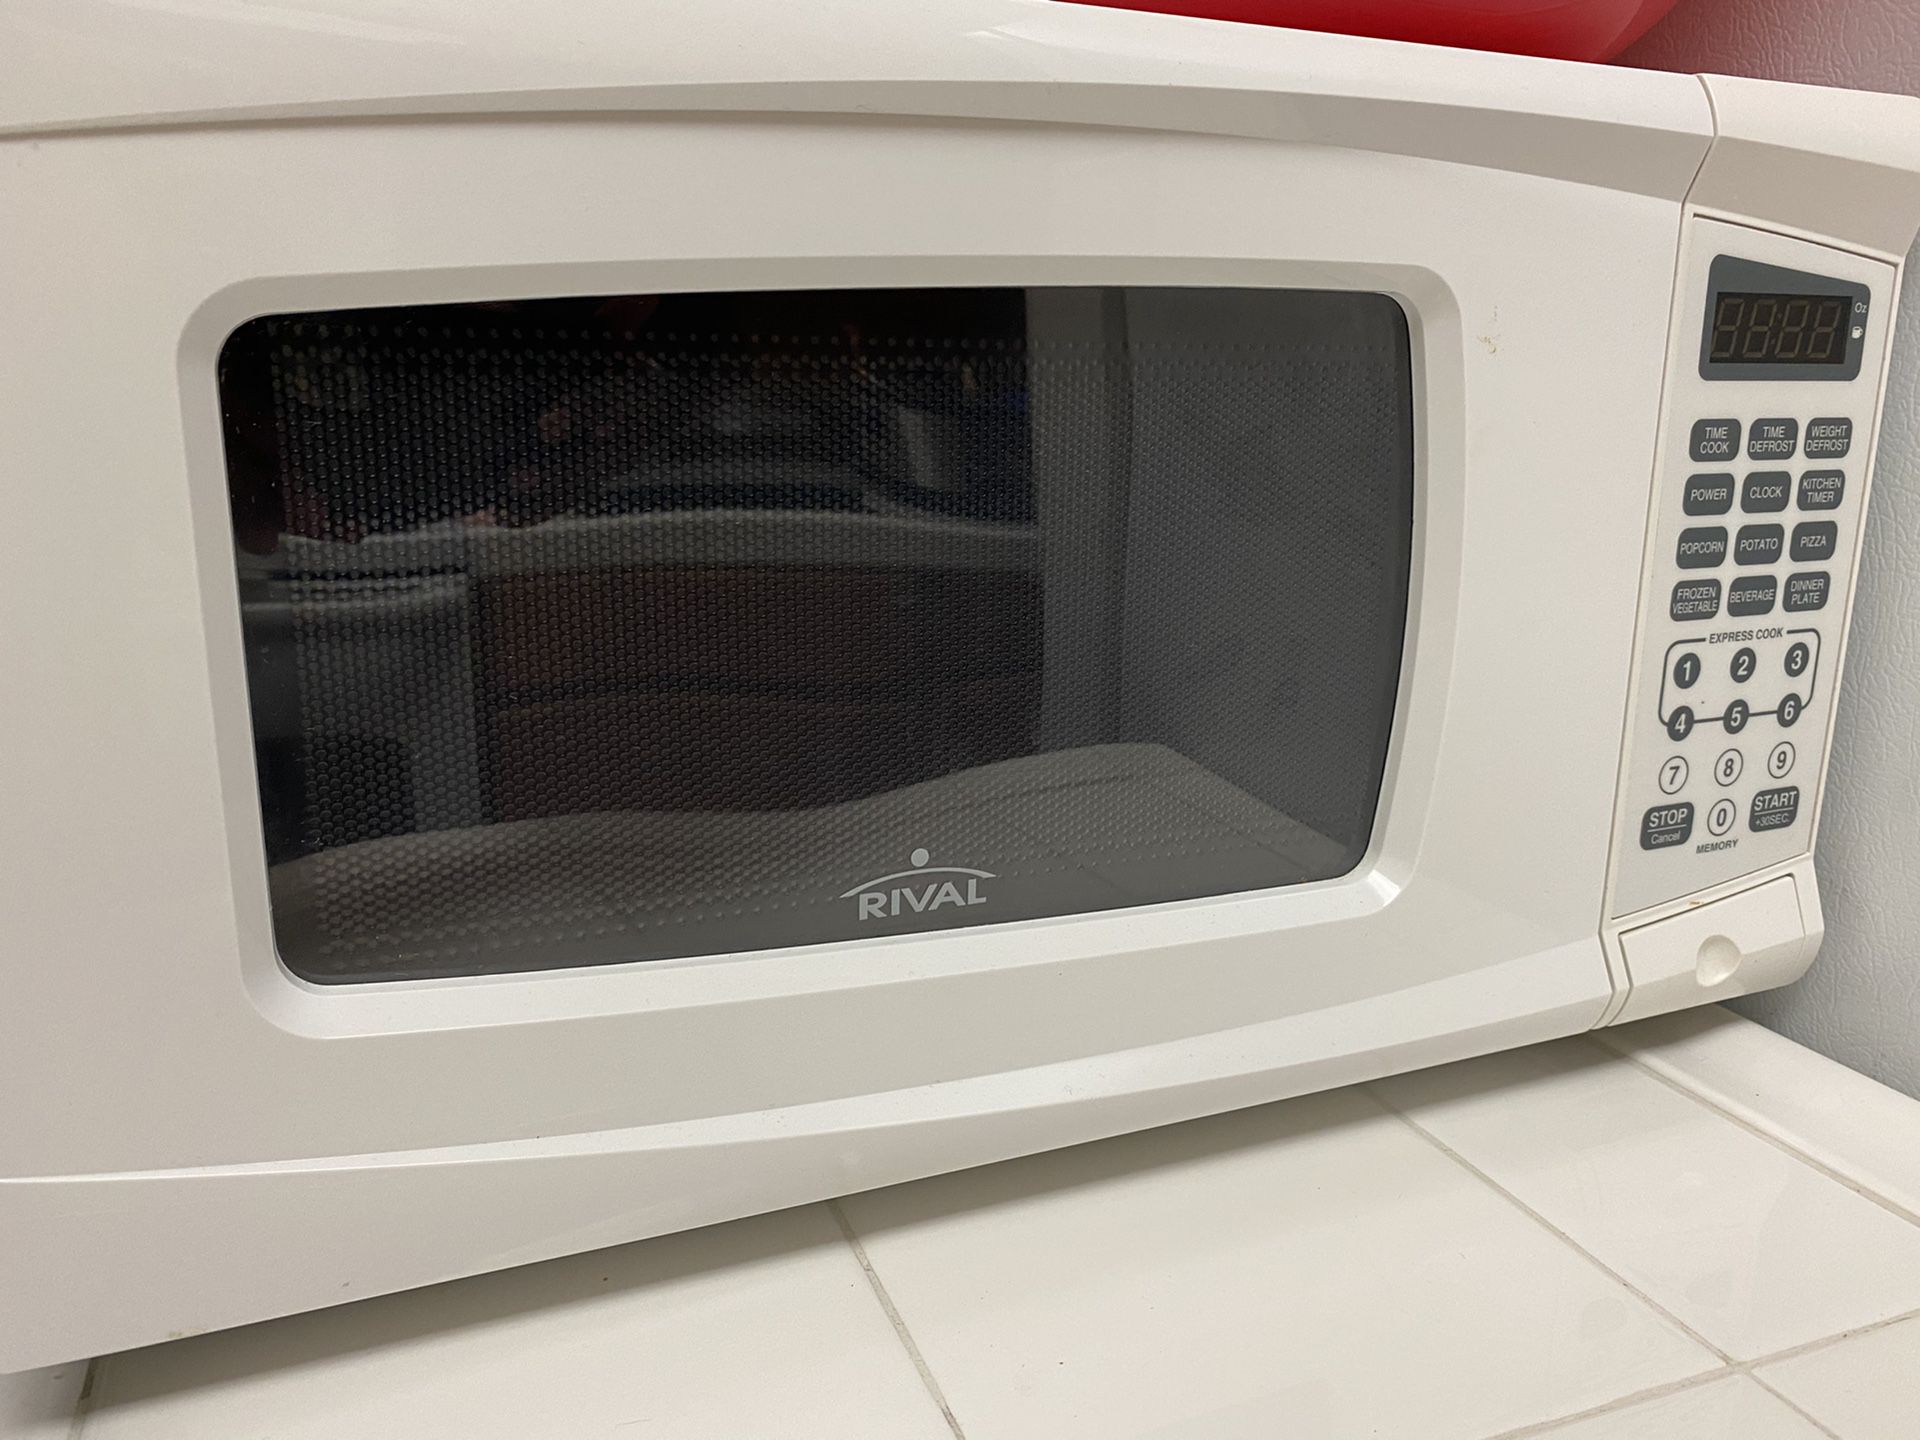 White microwave